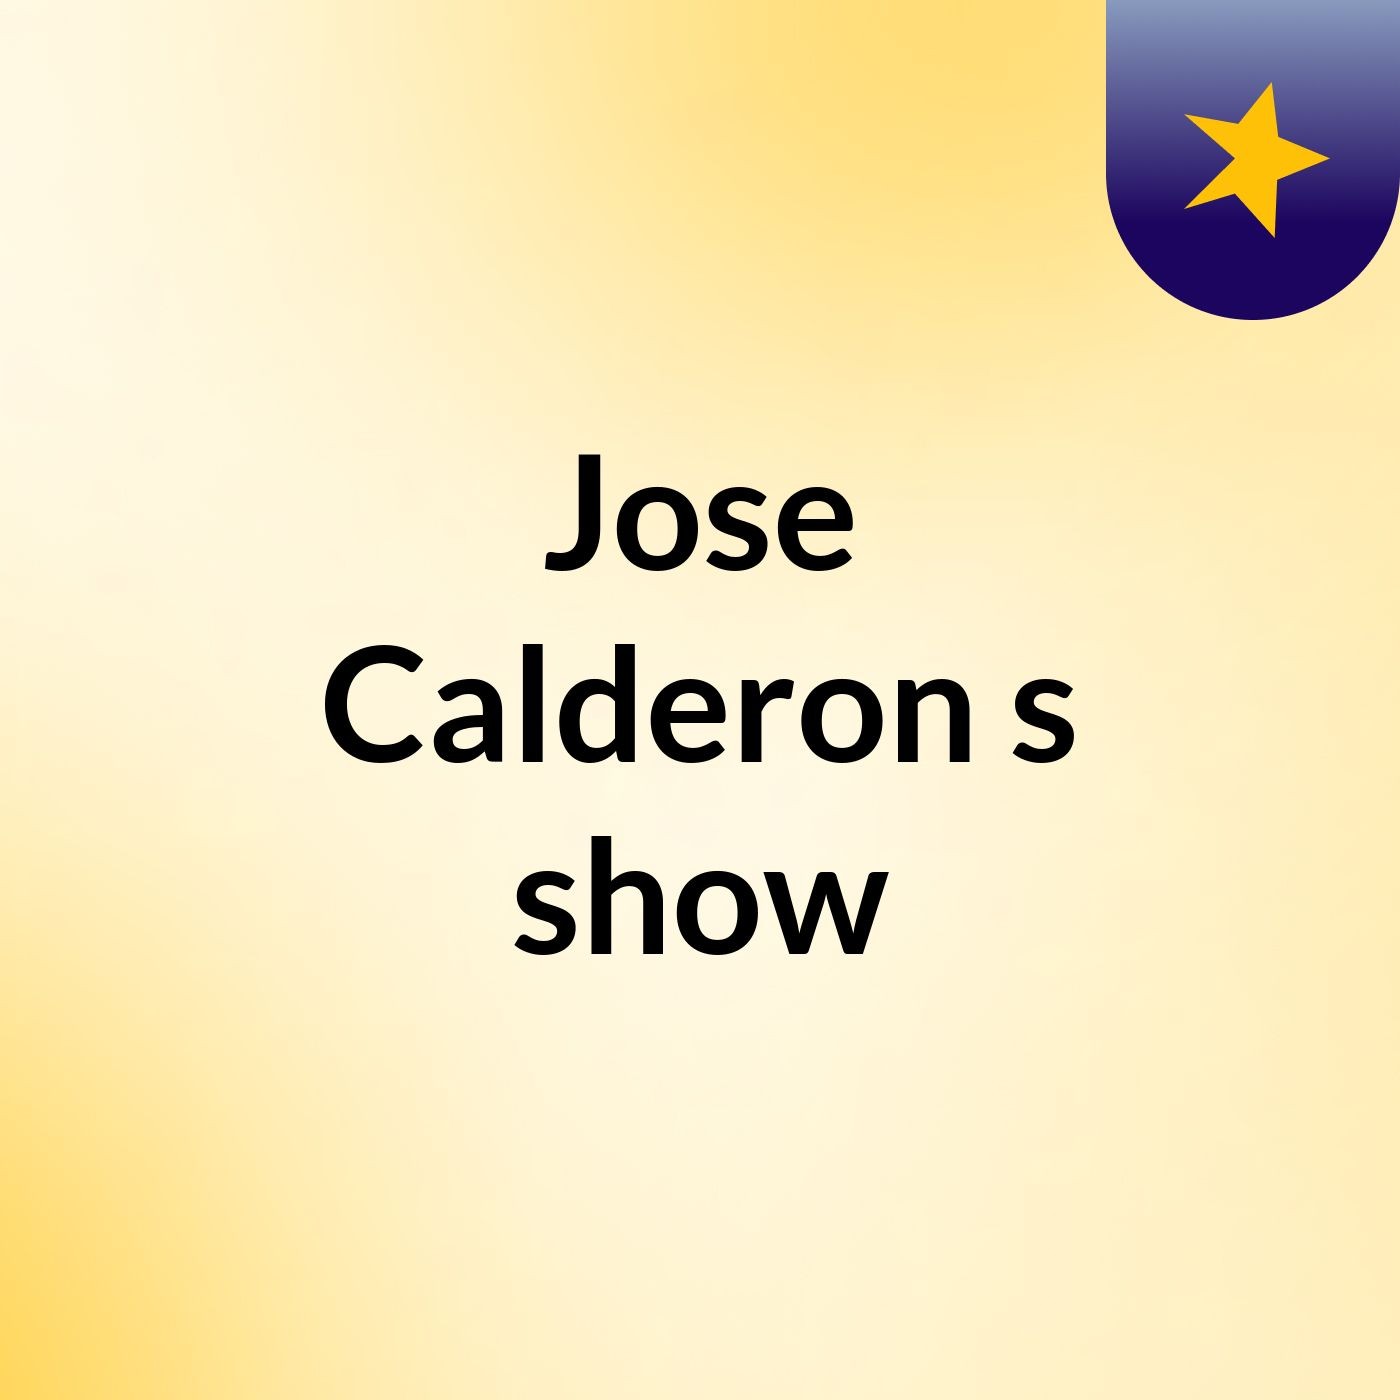 Jose Calderon's show